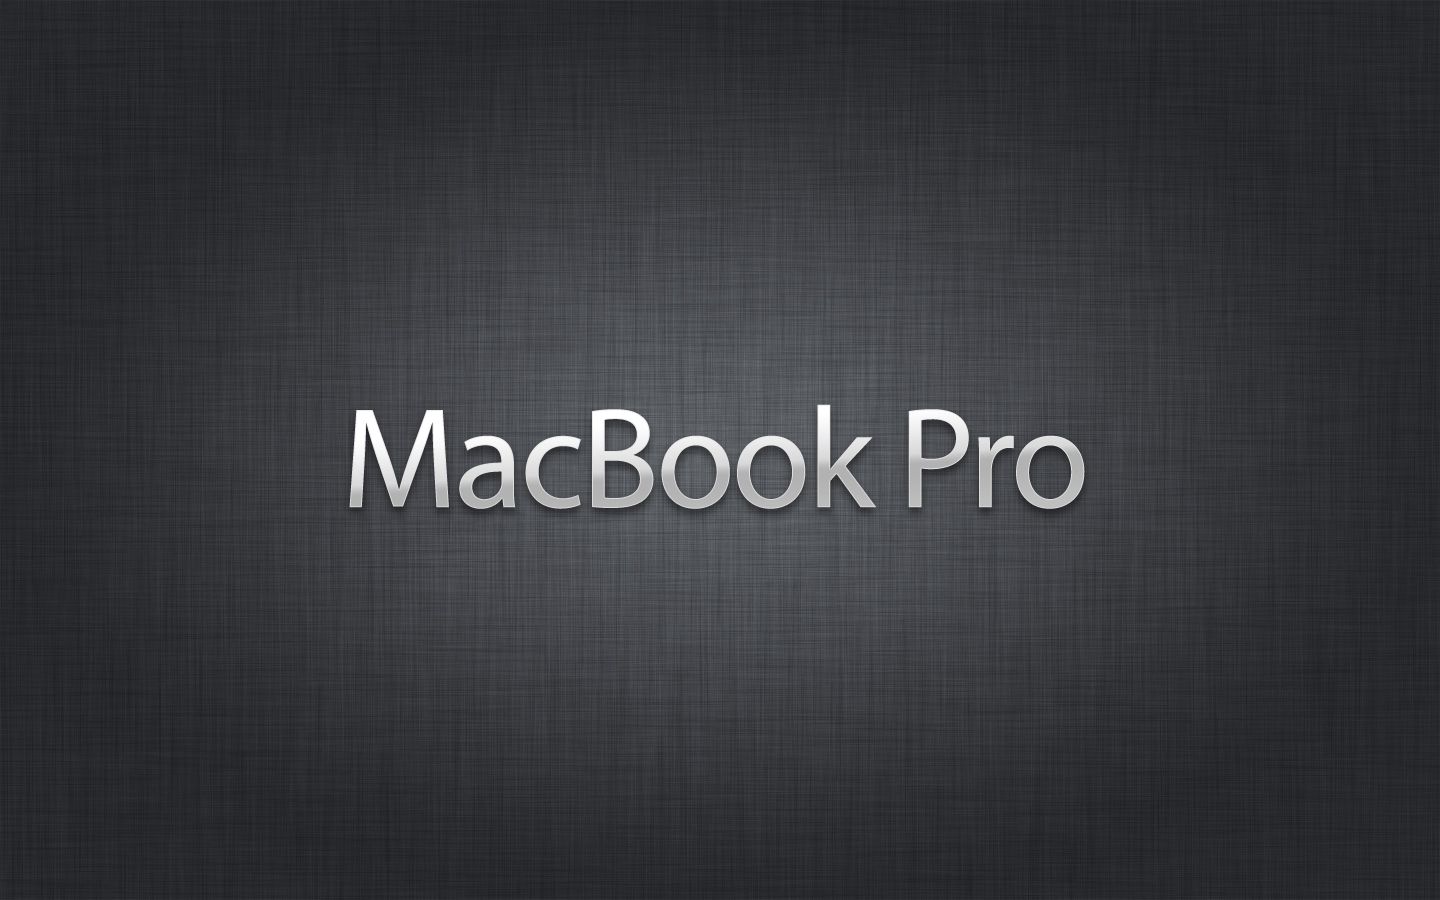 MacBook Pro Wallpaper HD Wallpaper ForWallpapers.com